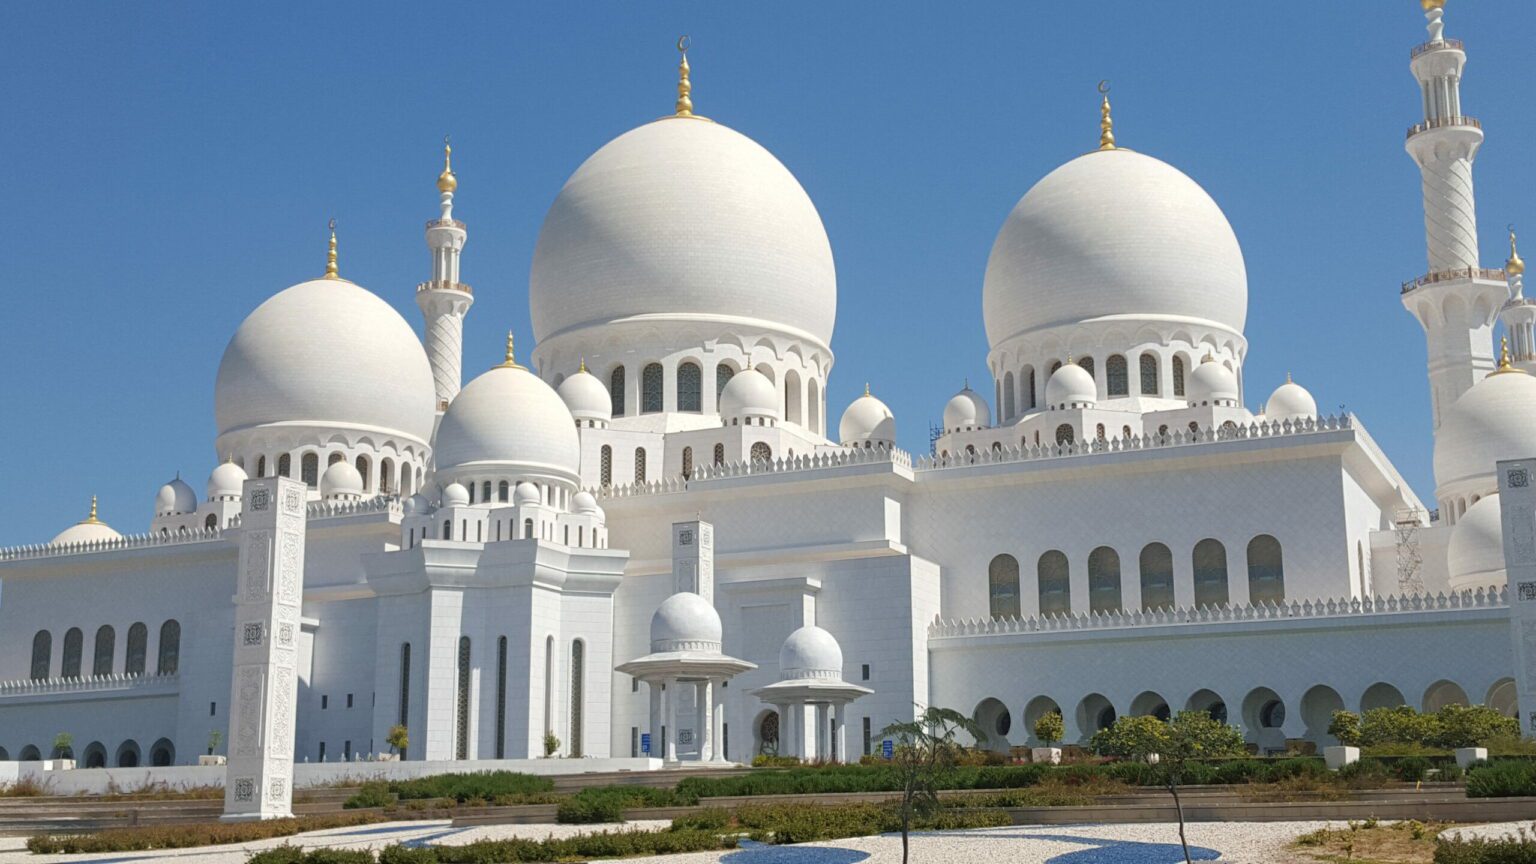 Tour Moschee Abu Dhabi